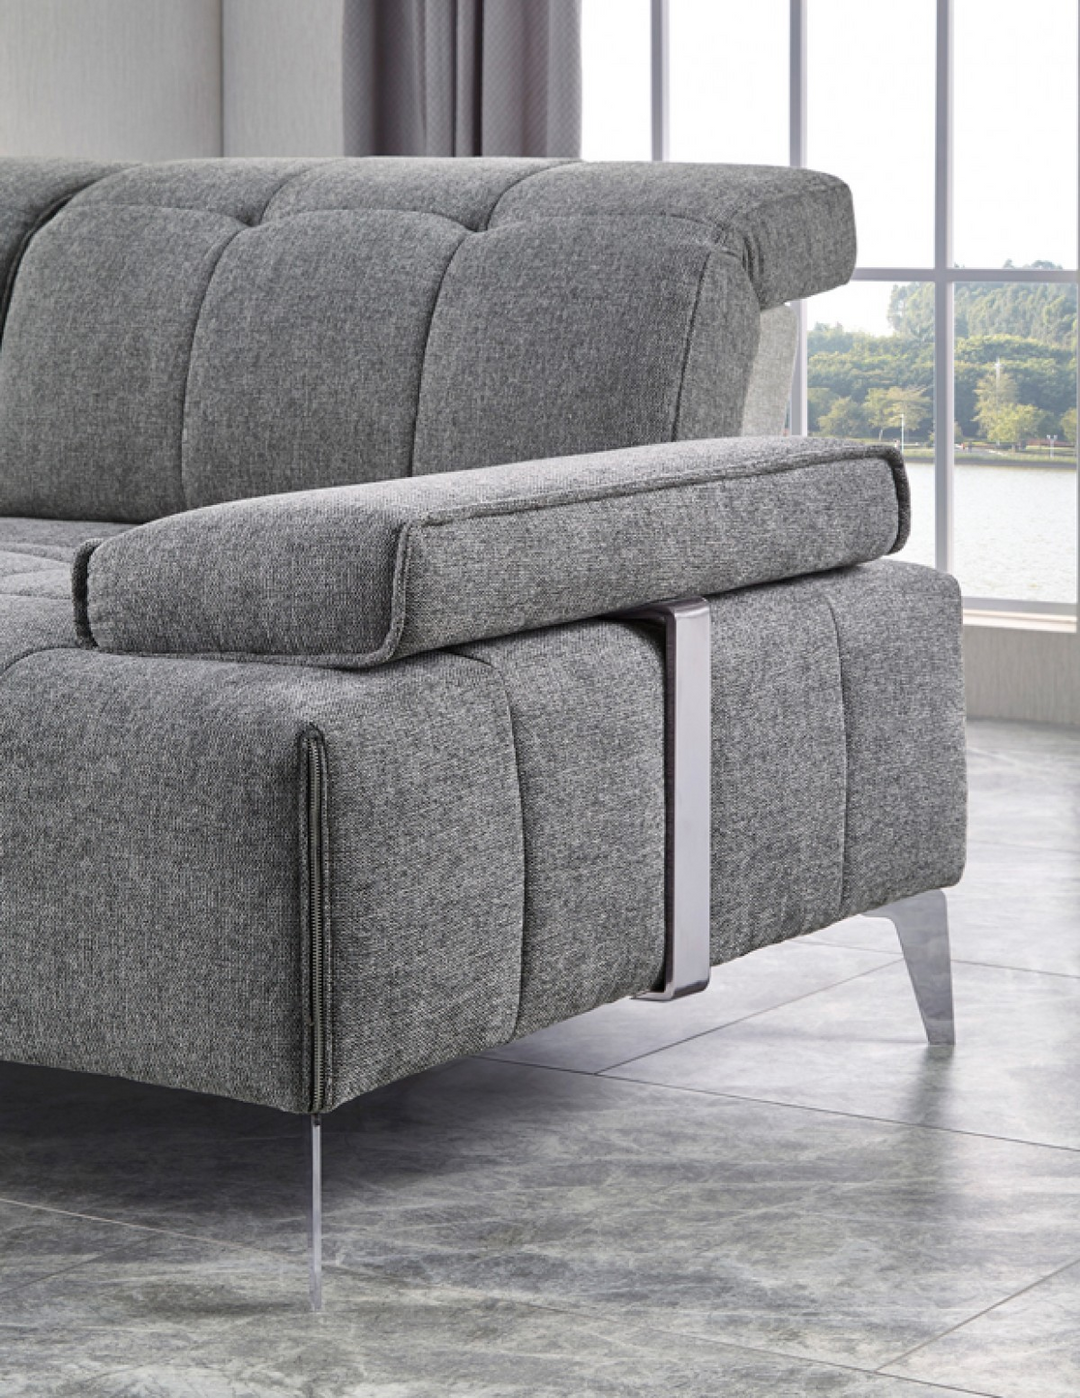 Boho Aesthetic Large Gray Modular L Shaped Three Piece Corner Sofa Sectional | Biophilic Design Airbnb Decor Furniture 